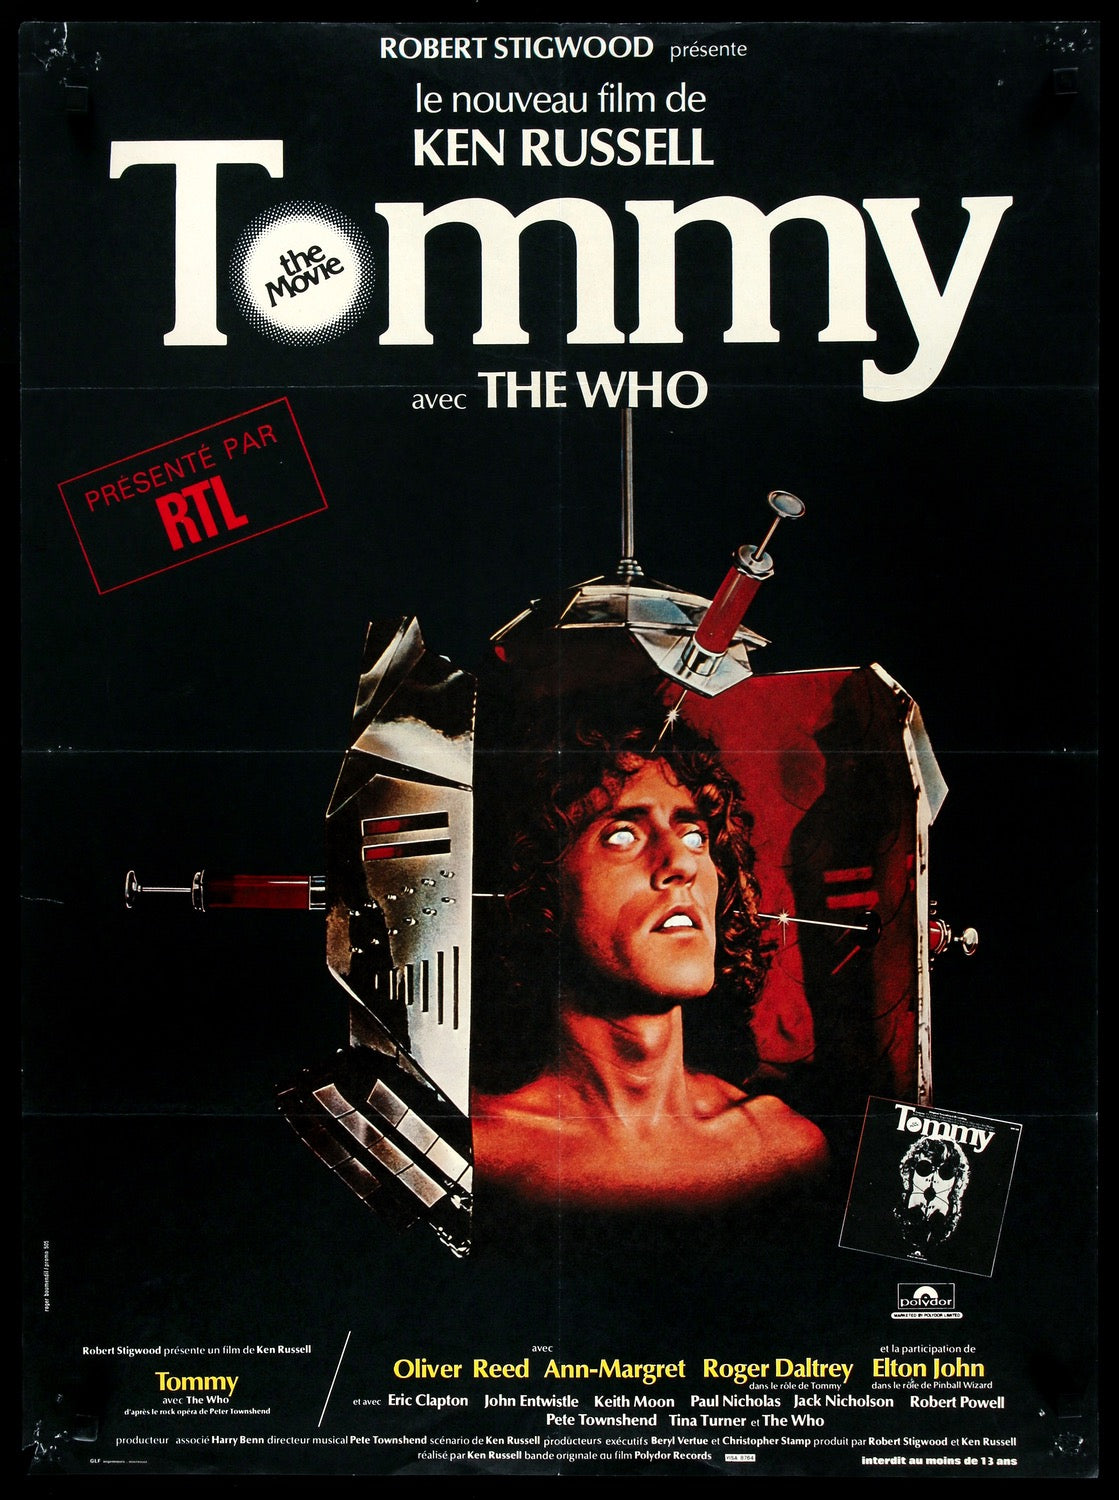 Tommy (1975) original movie poster for sale at Original Film Art